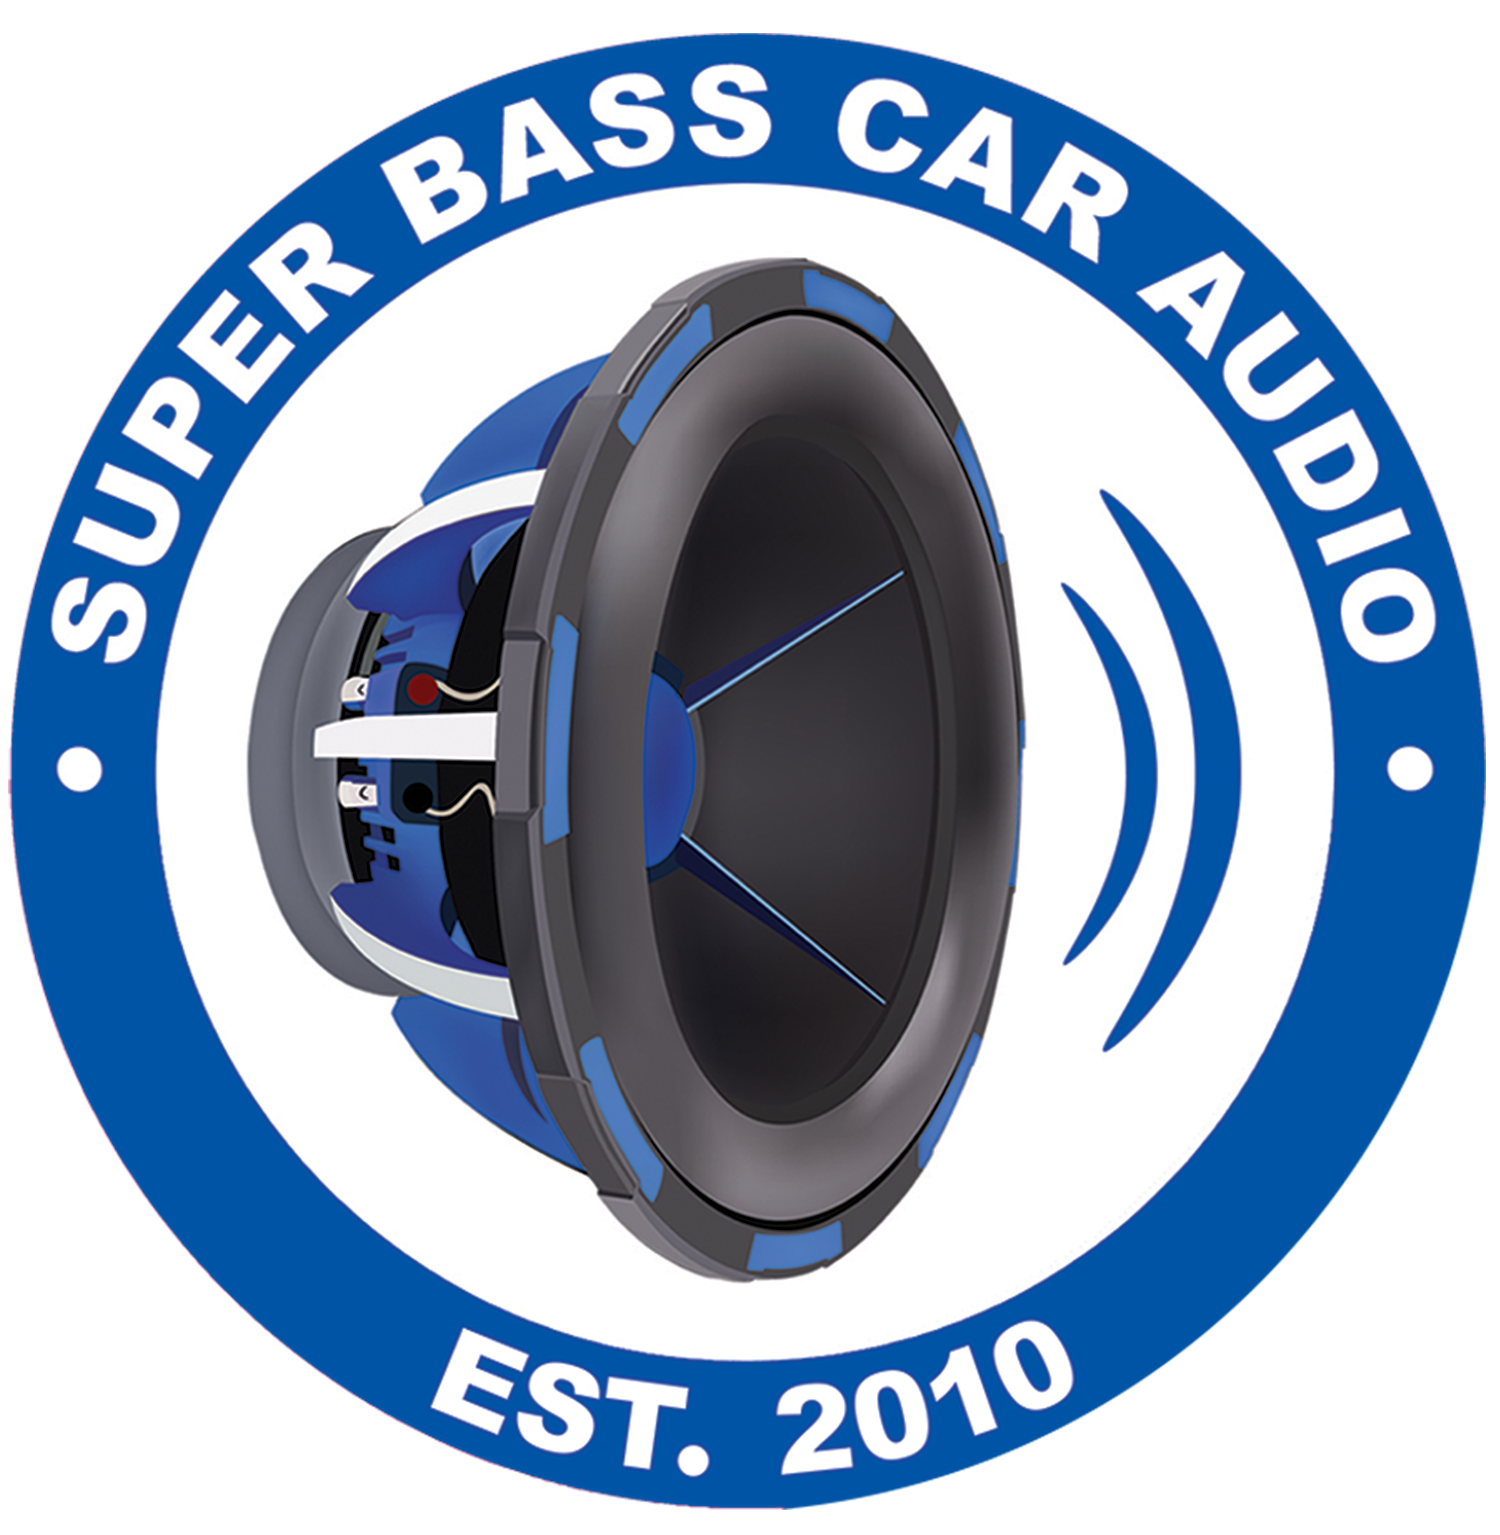 Super Bass Car Audio